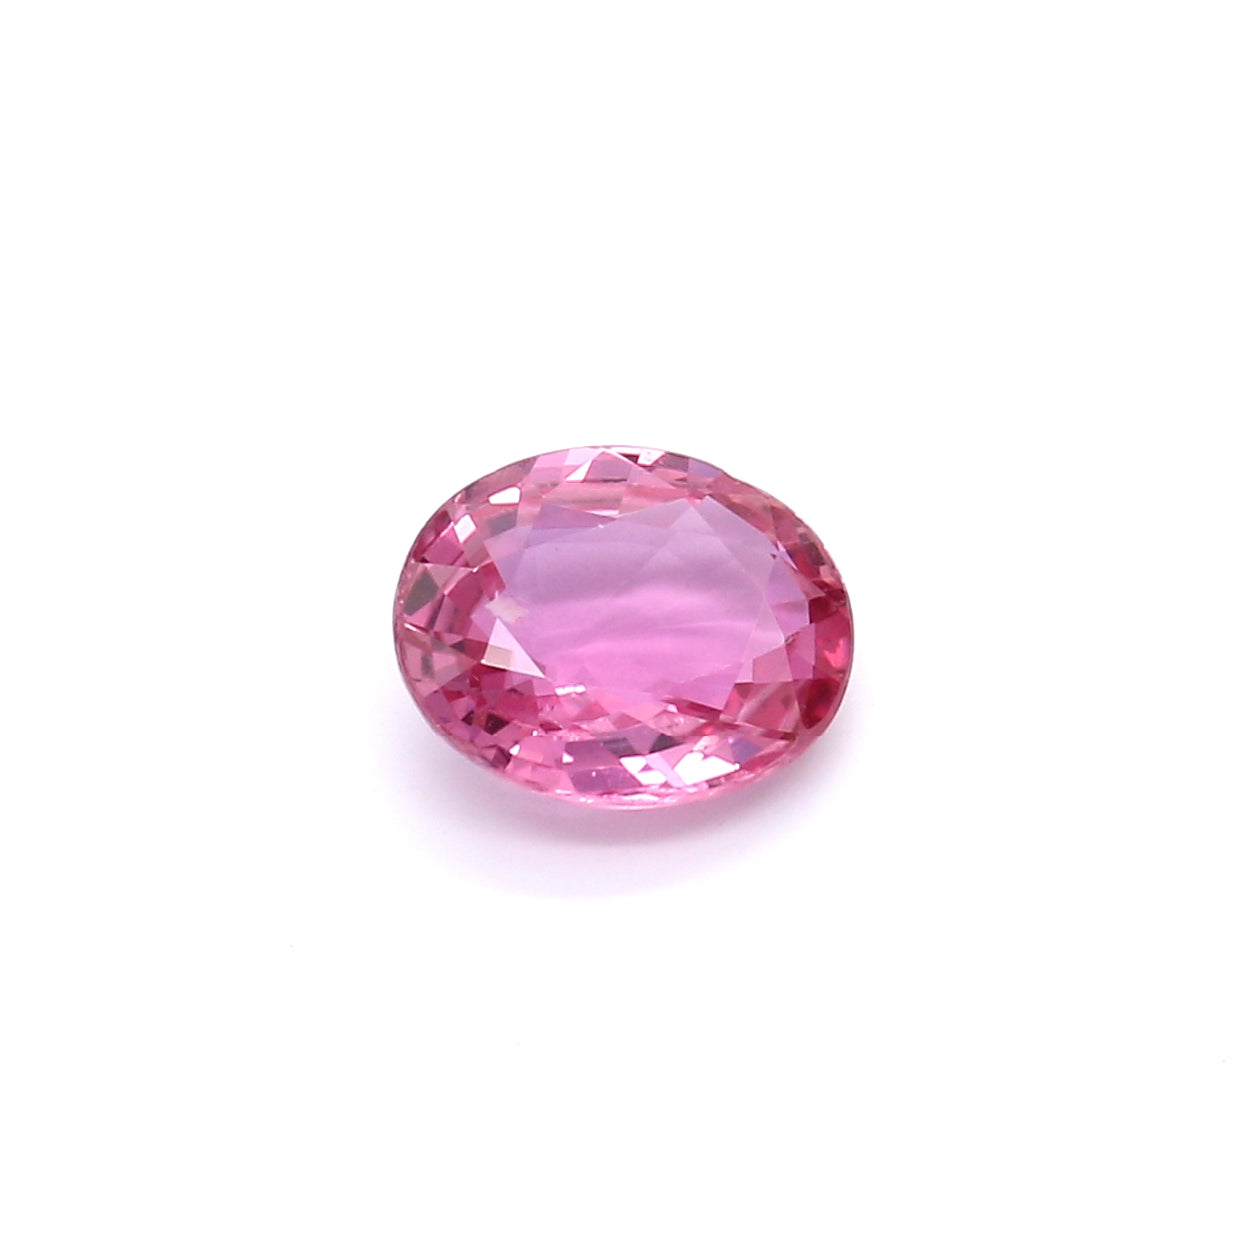 1.82ct Purplish Pink, Oval Sapphire, Heated, Madagascar - 8.26 x 6.80 x 3.40mm